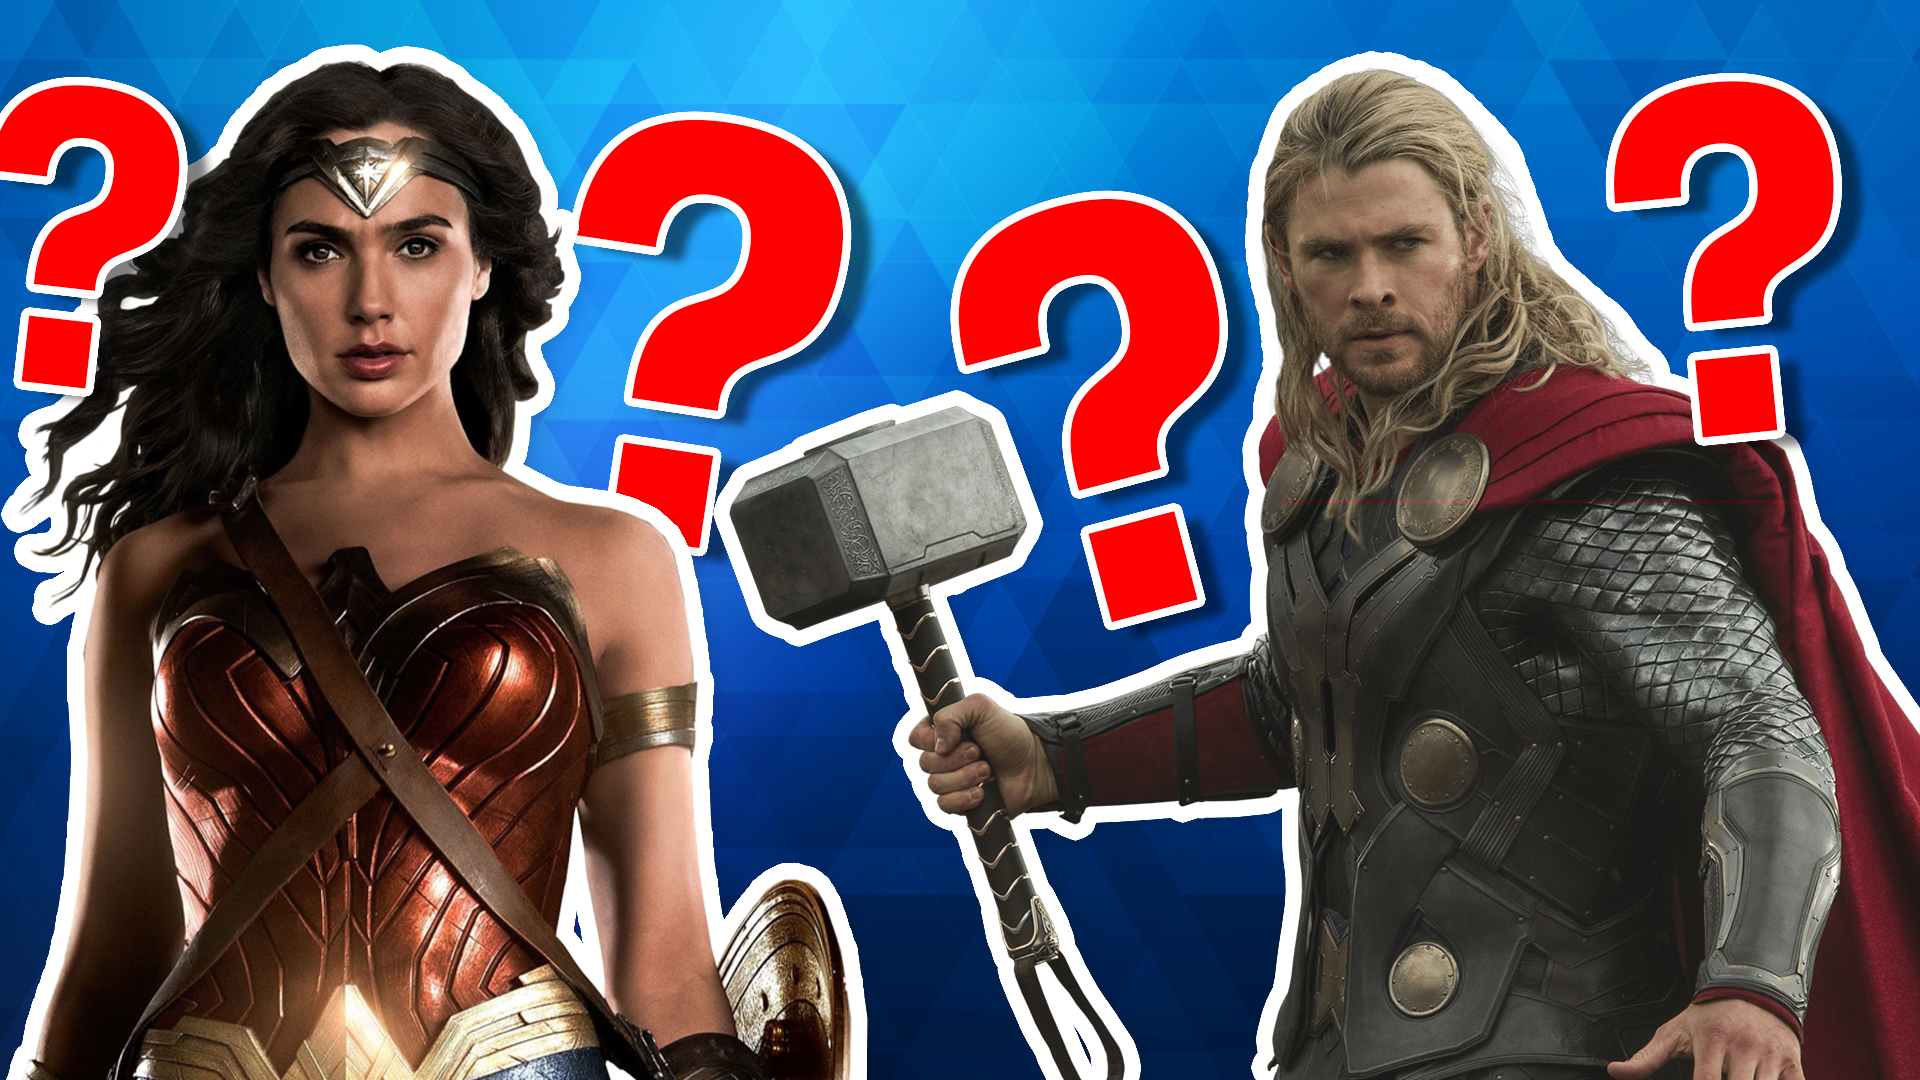 Superhero quiz image featuring Wonder Woman and Thor